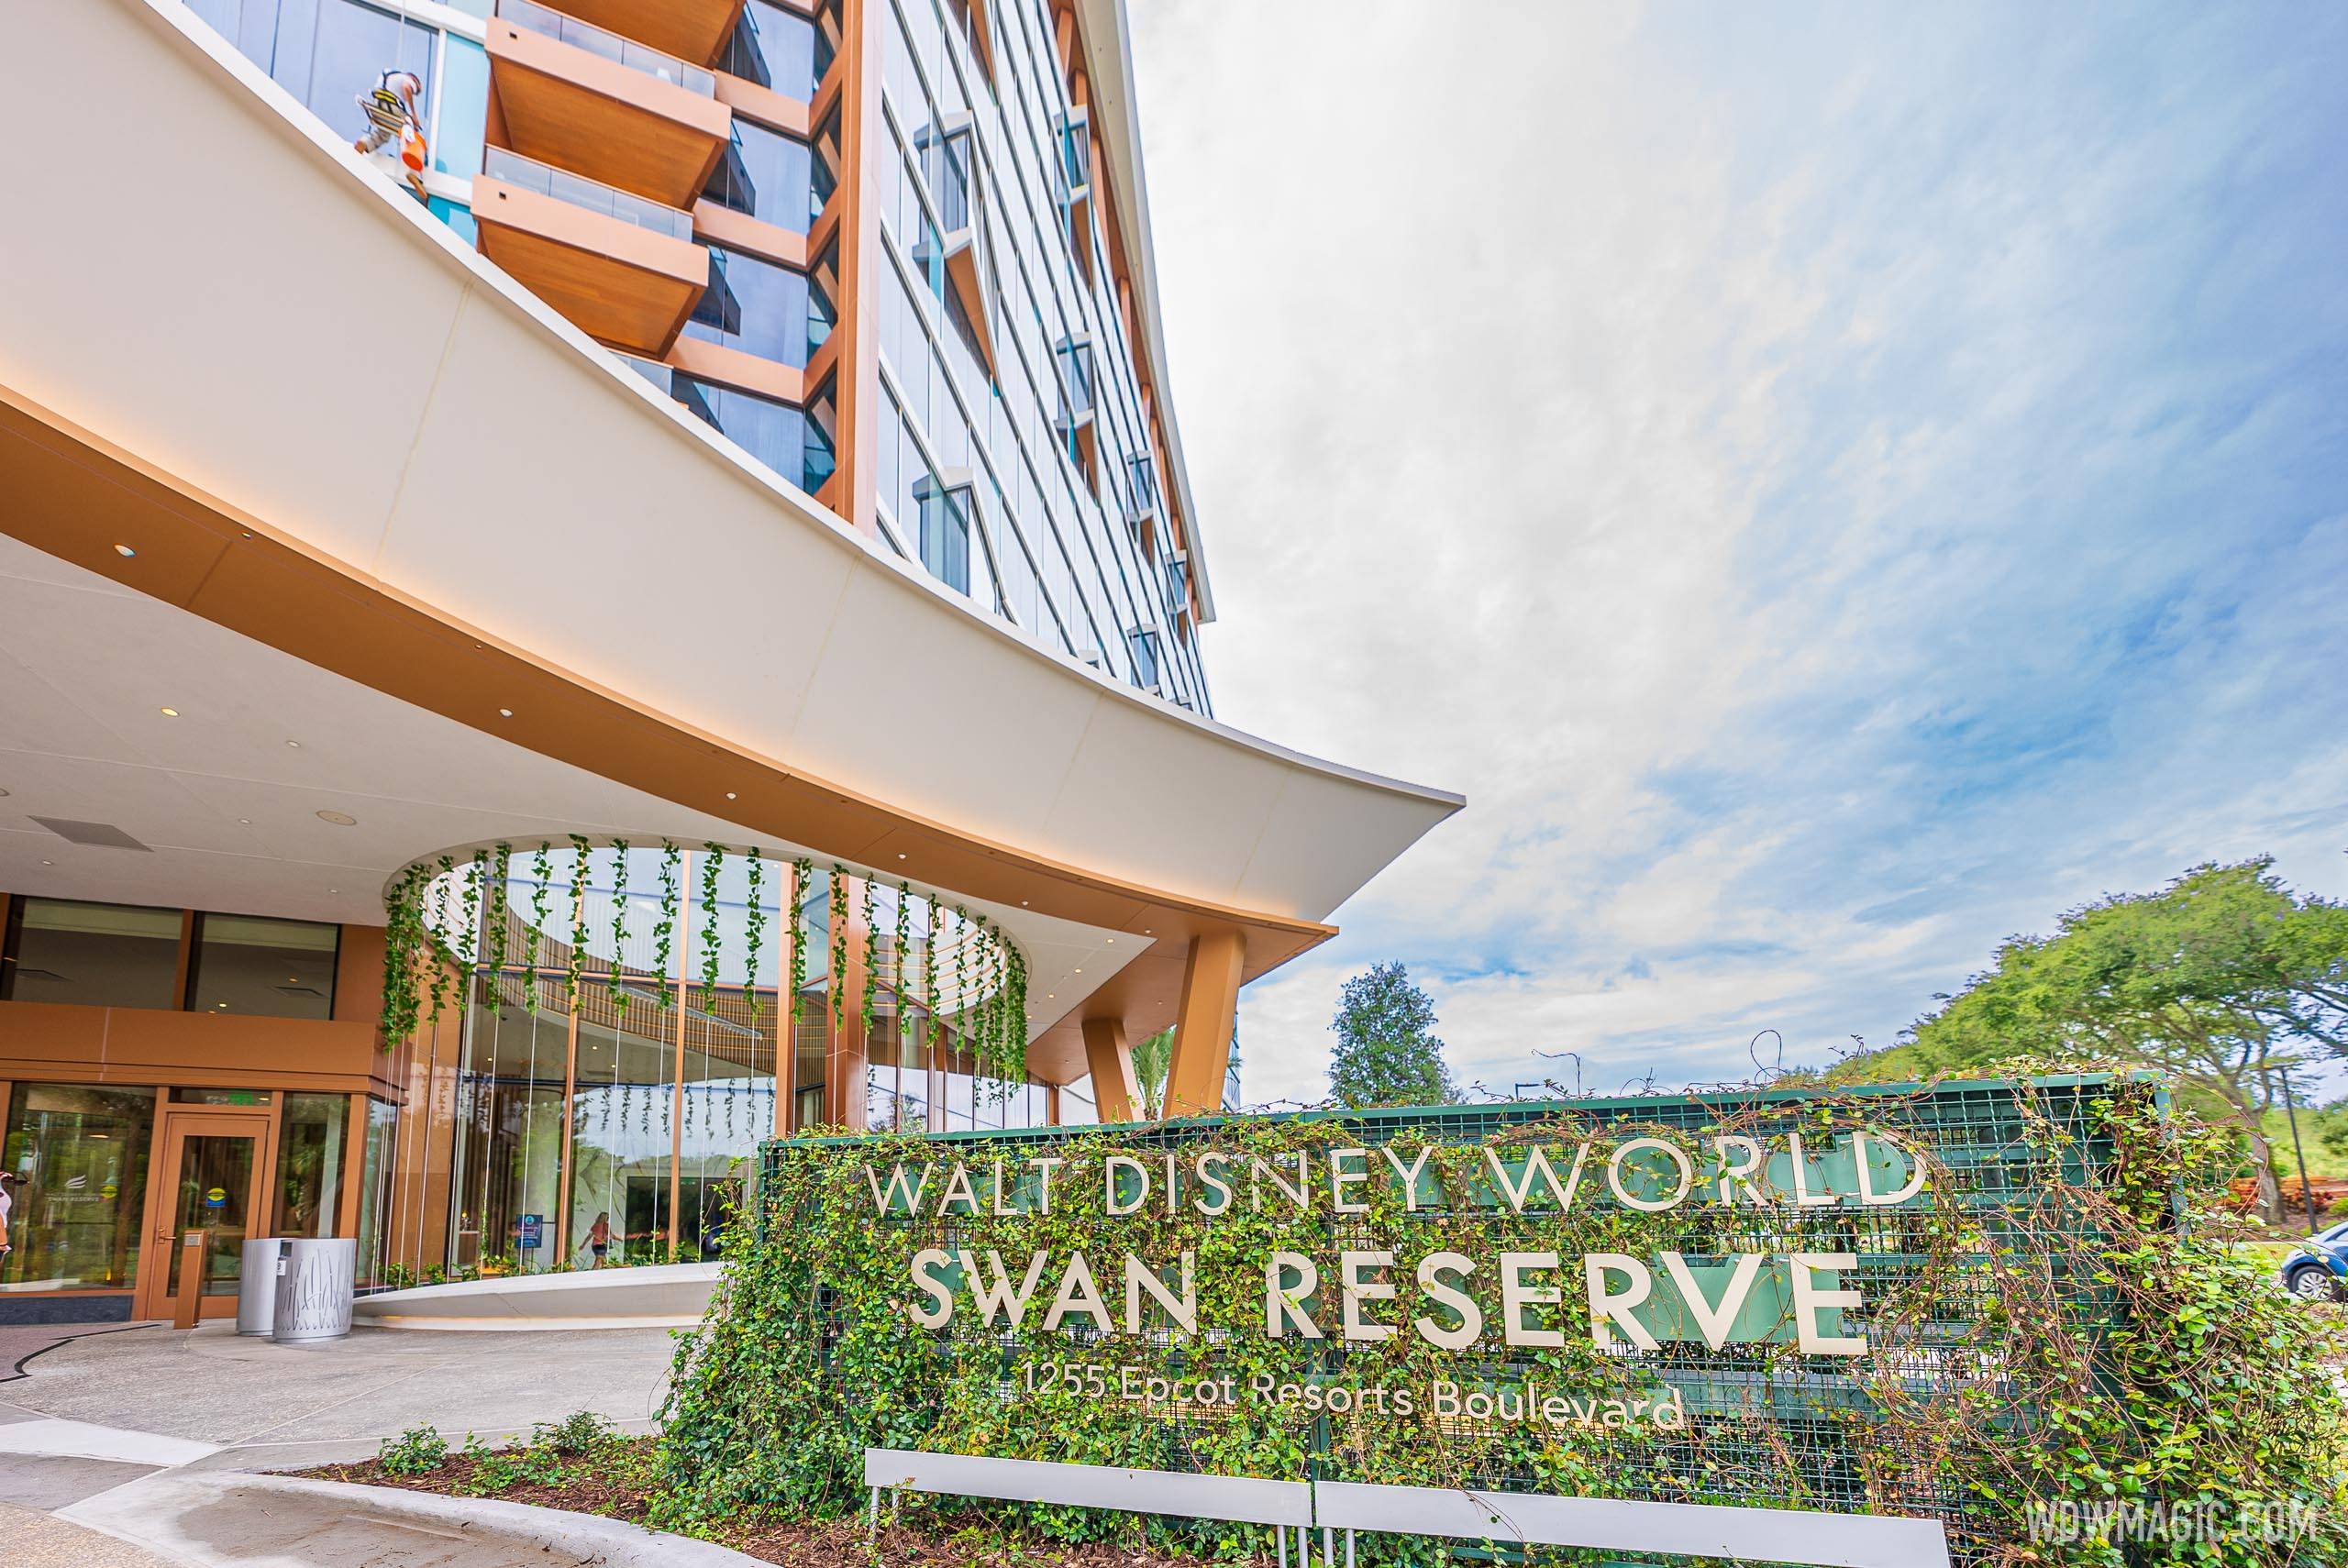 Tour of the new Walt Disney World Swan Reserve